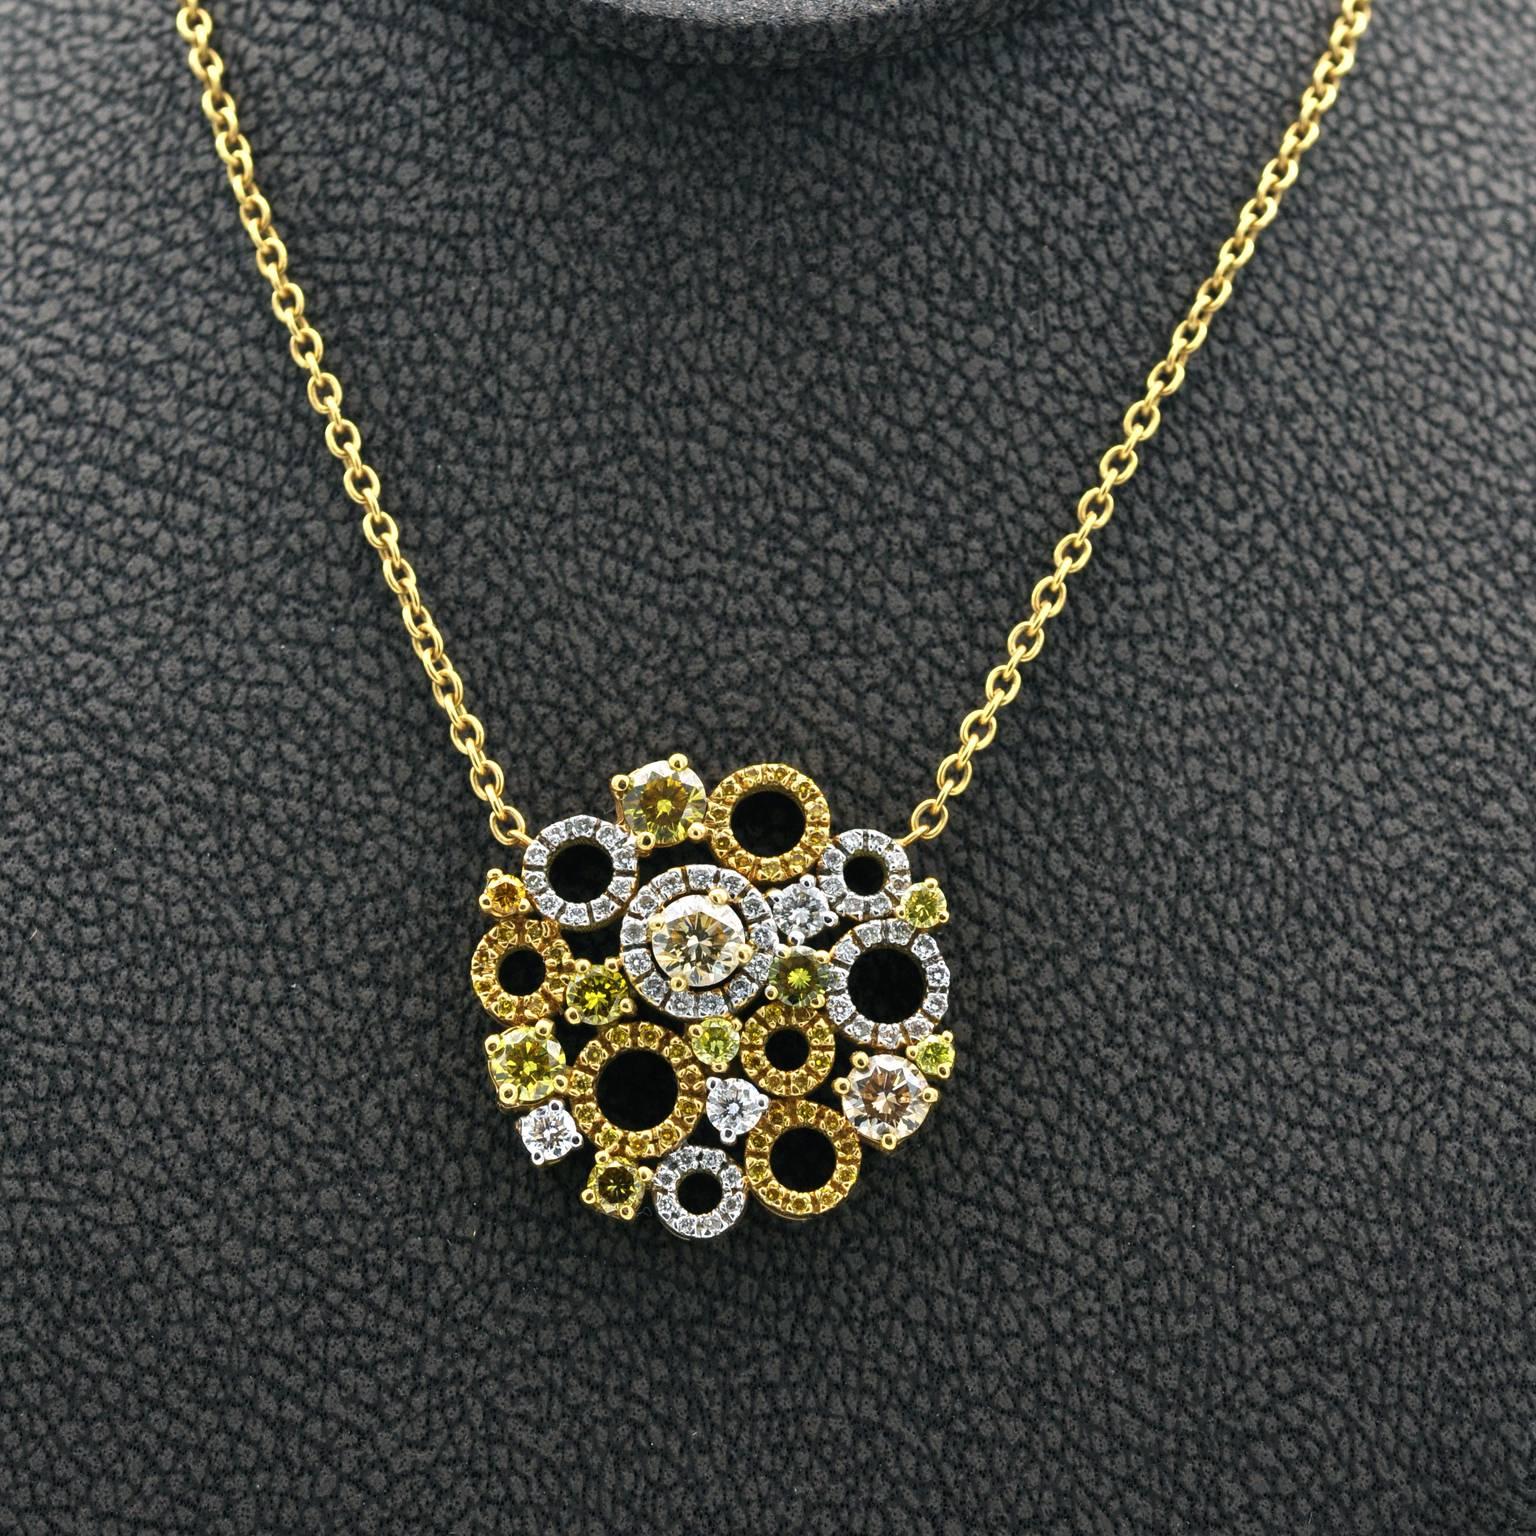 Attractive trendy Necklace, diamond set circles and round diamonds arranged in an elegant round bouquet like cluster.  
Yellow diamonds: 1.33 carat
white diamonds: 0.41 carat
